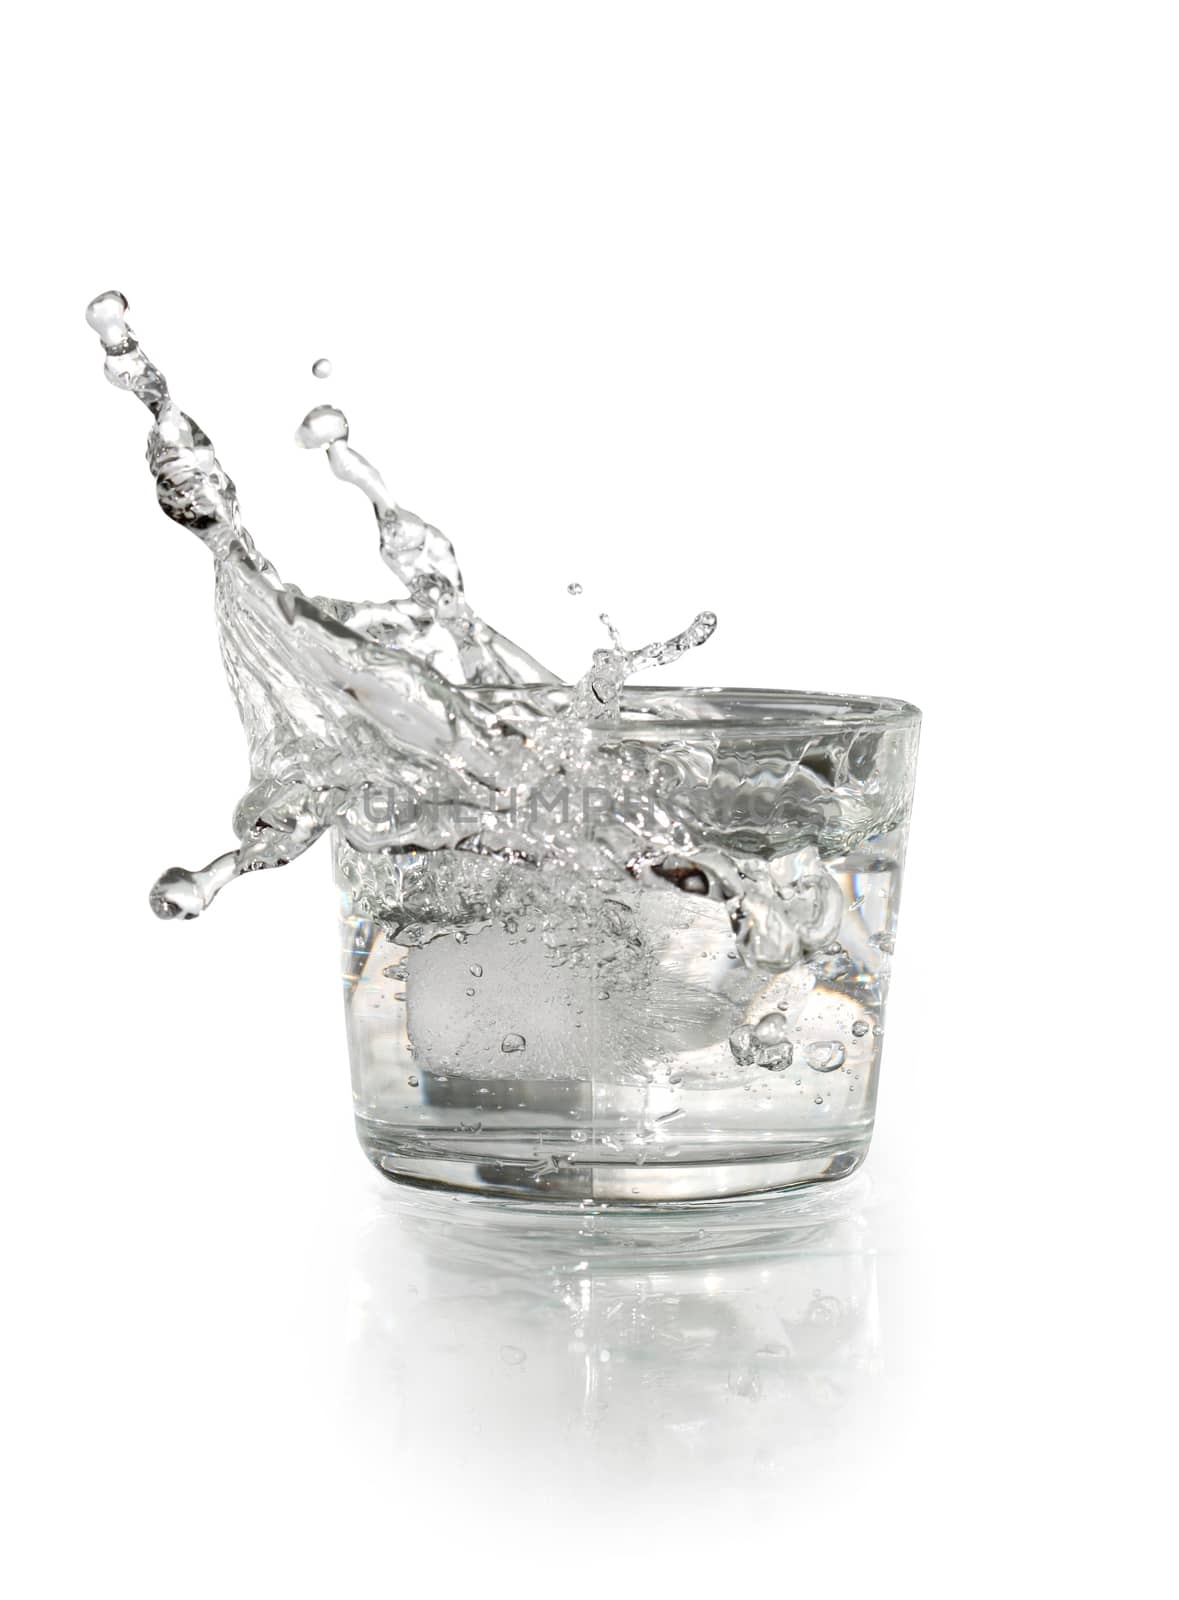 Glass With Splashing Water by kvkirillov